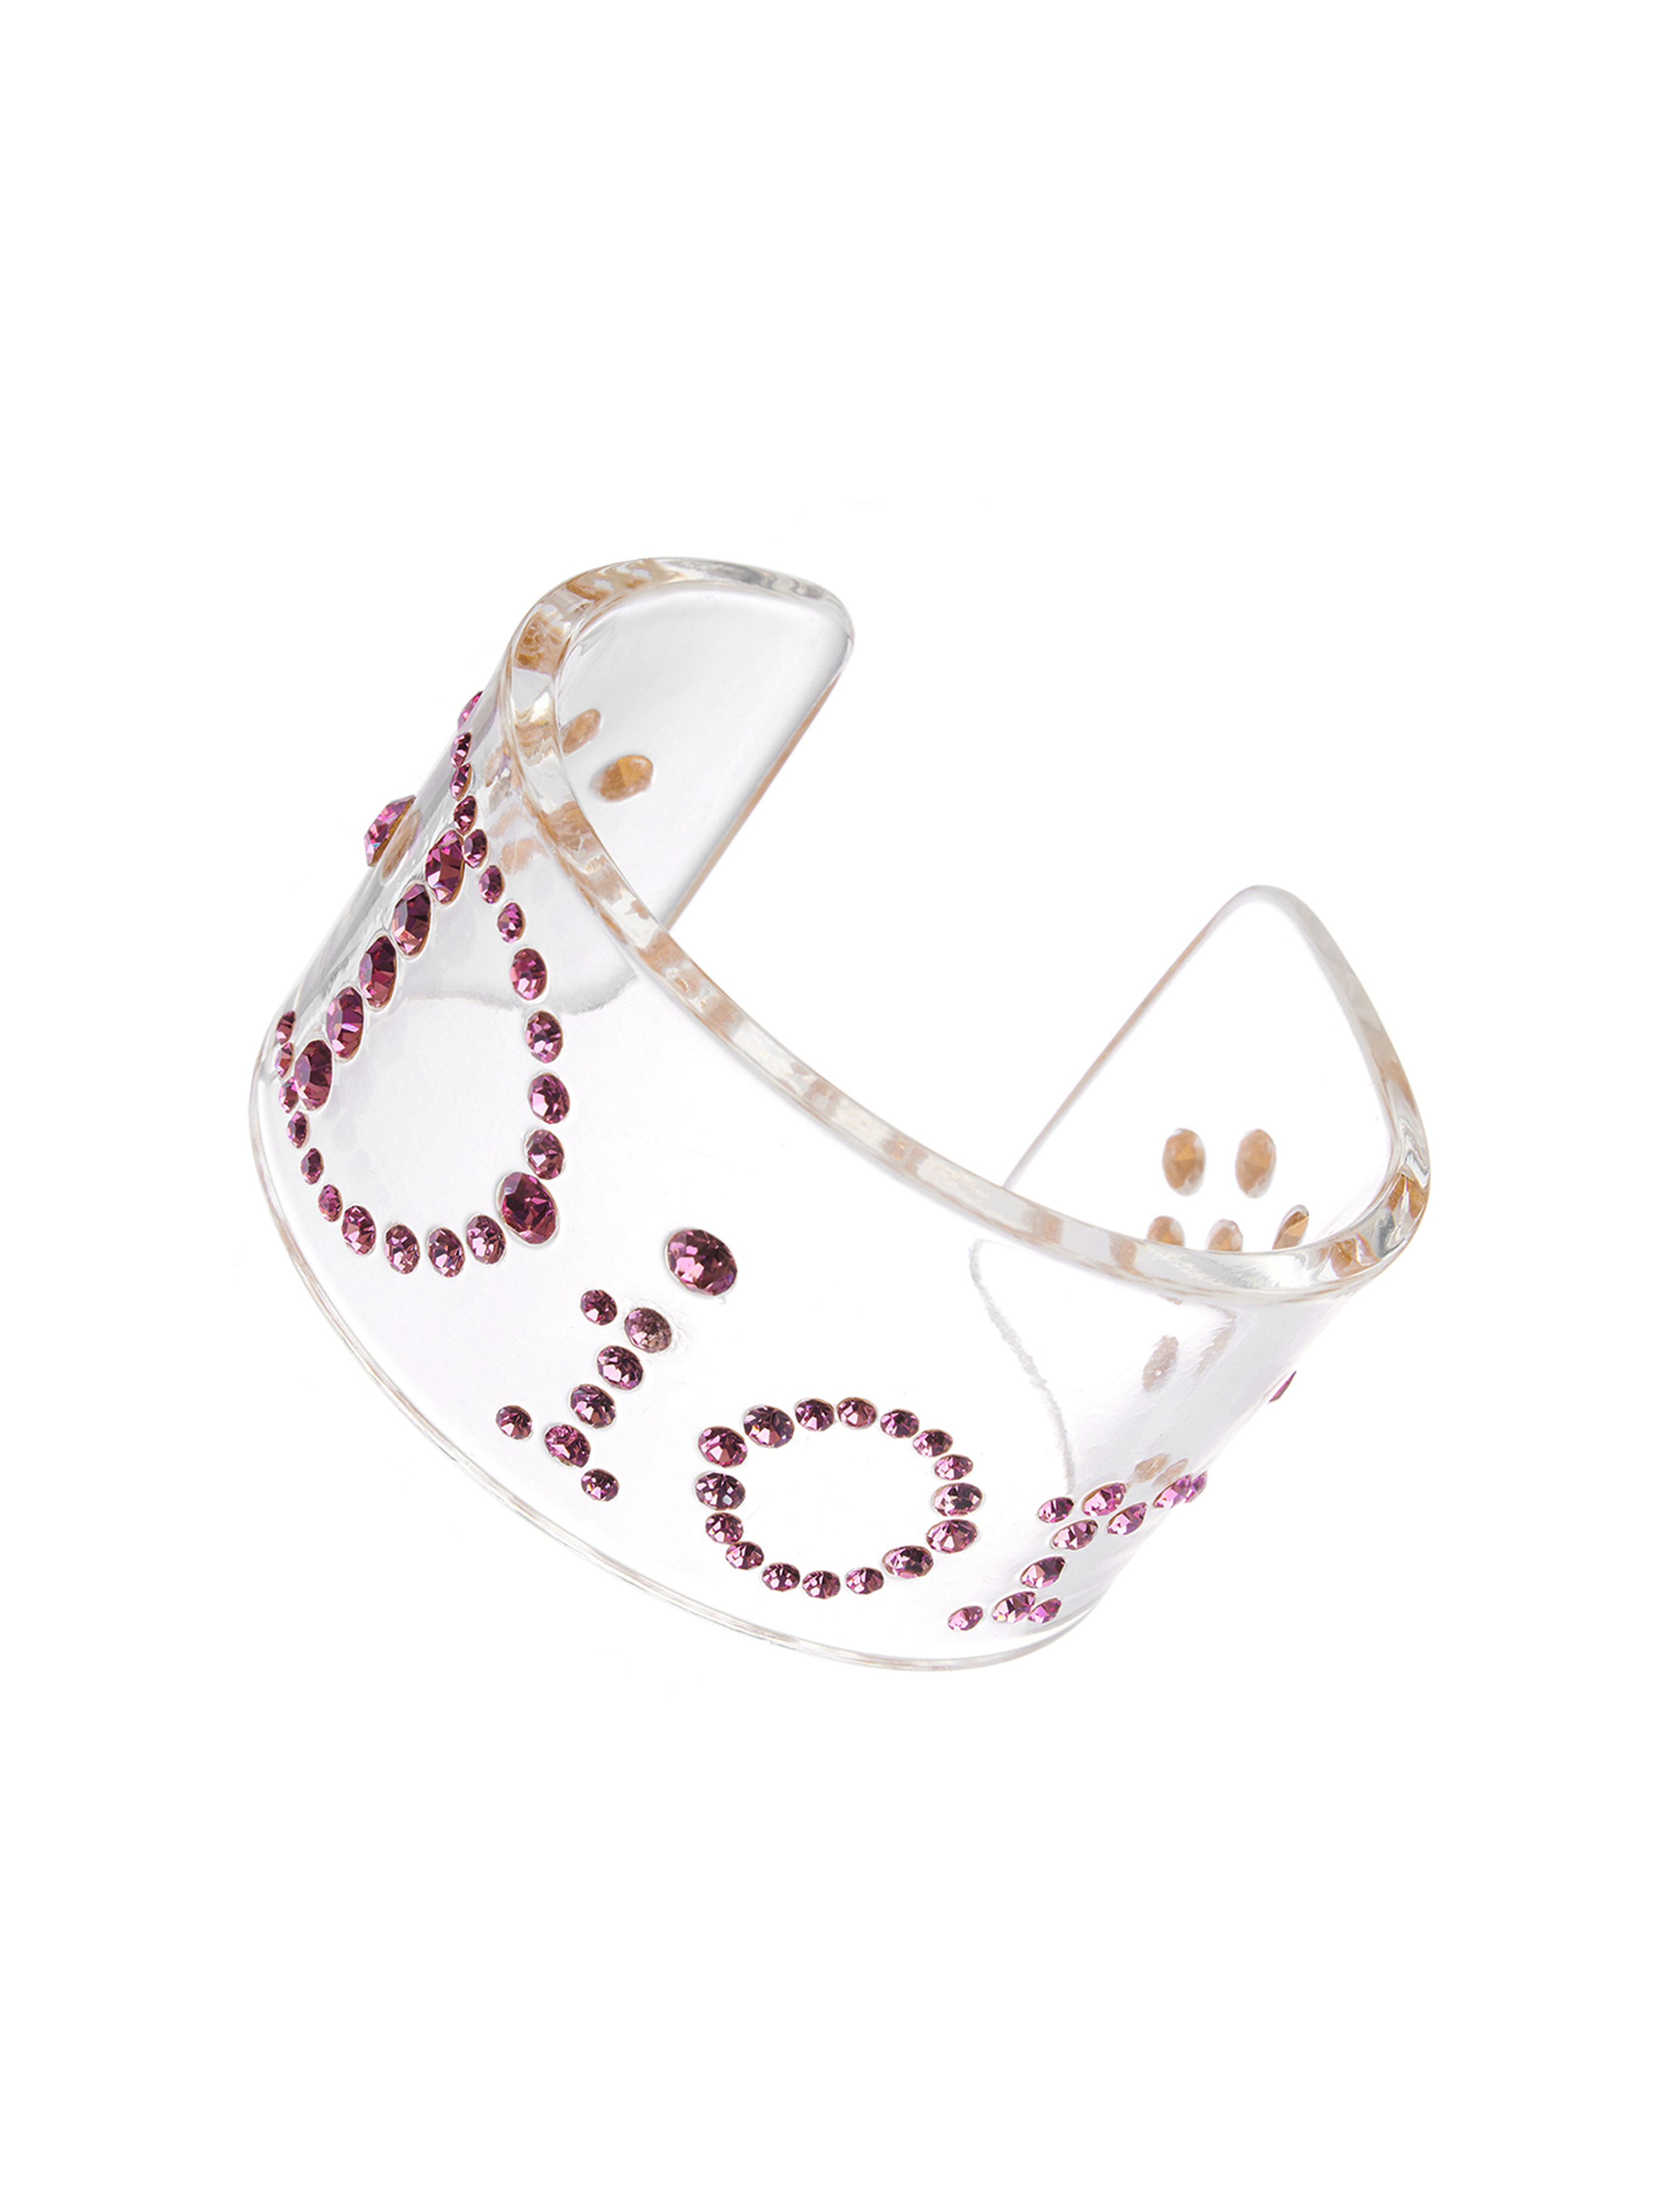 Christian Dior by John Galliano Fall 2004 Plastic Swarovski Cuff Bracelet